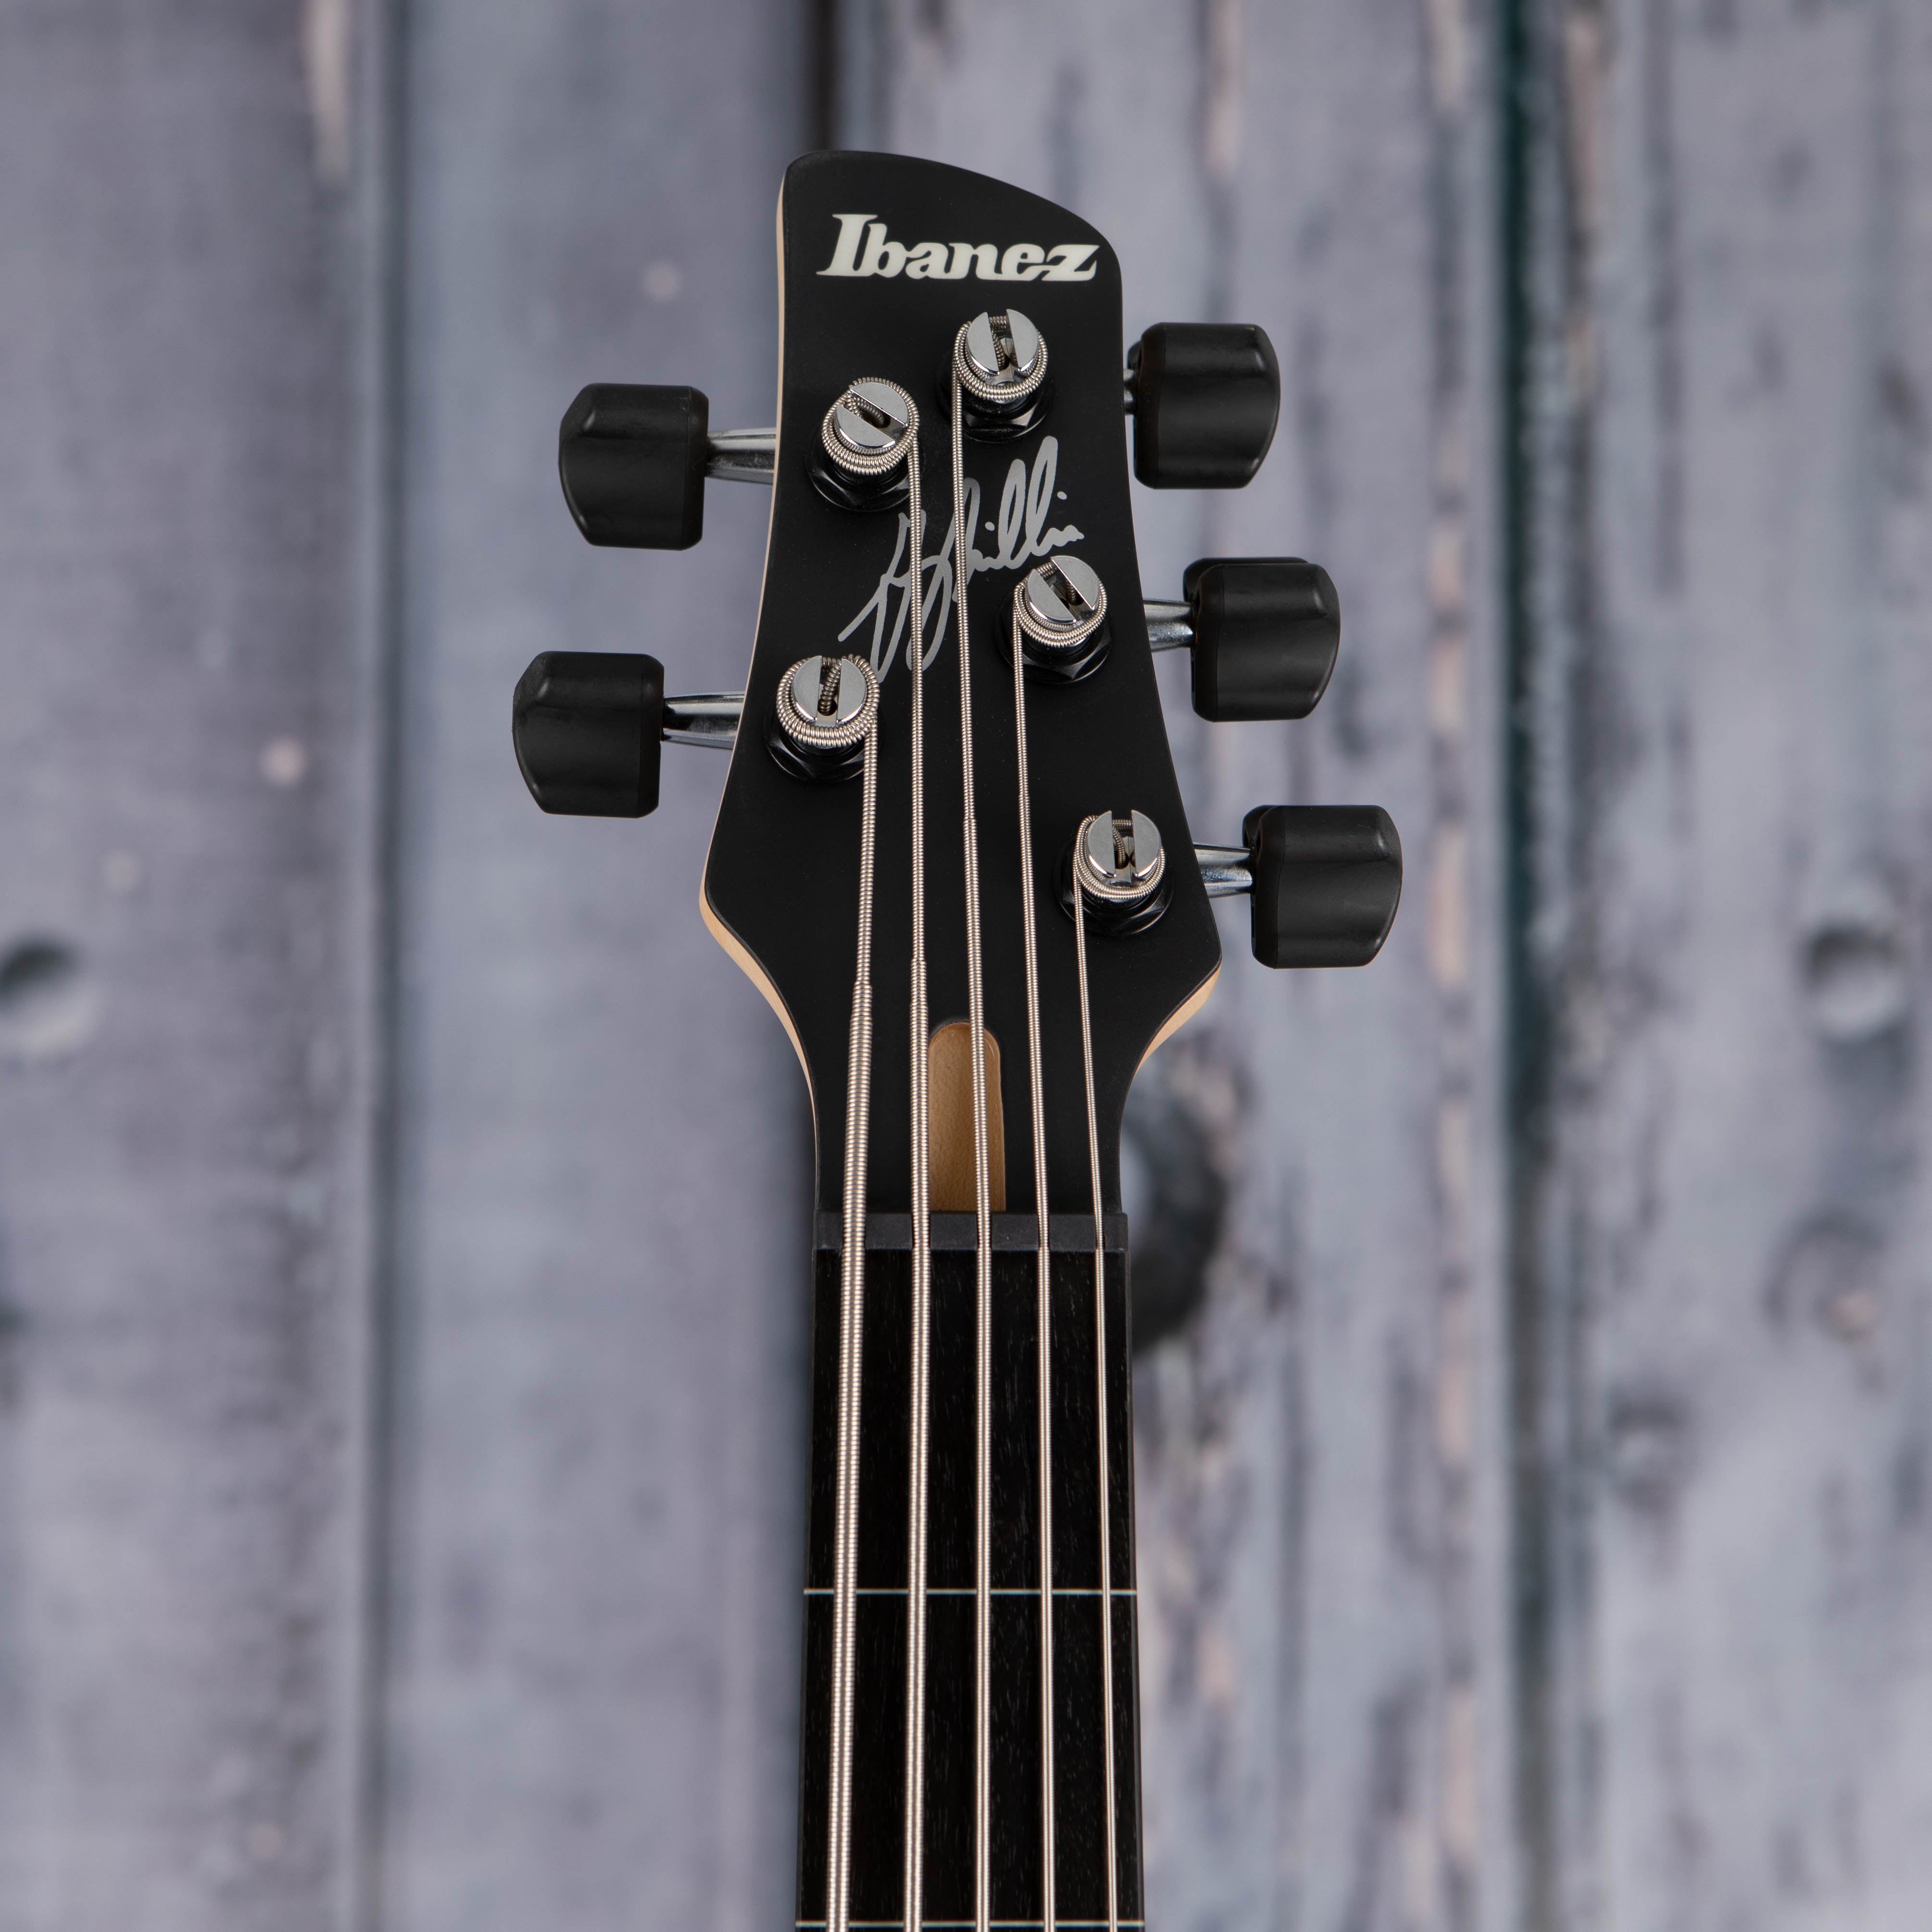 Ibanez Premium Gary Willis Signature Fretless 5-String Electric Bass Guitar, Silver Wave Burst Flat, front headstock